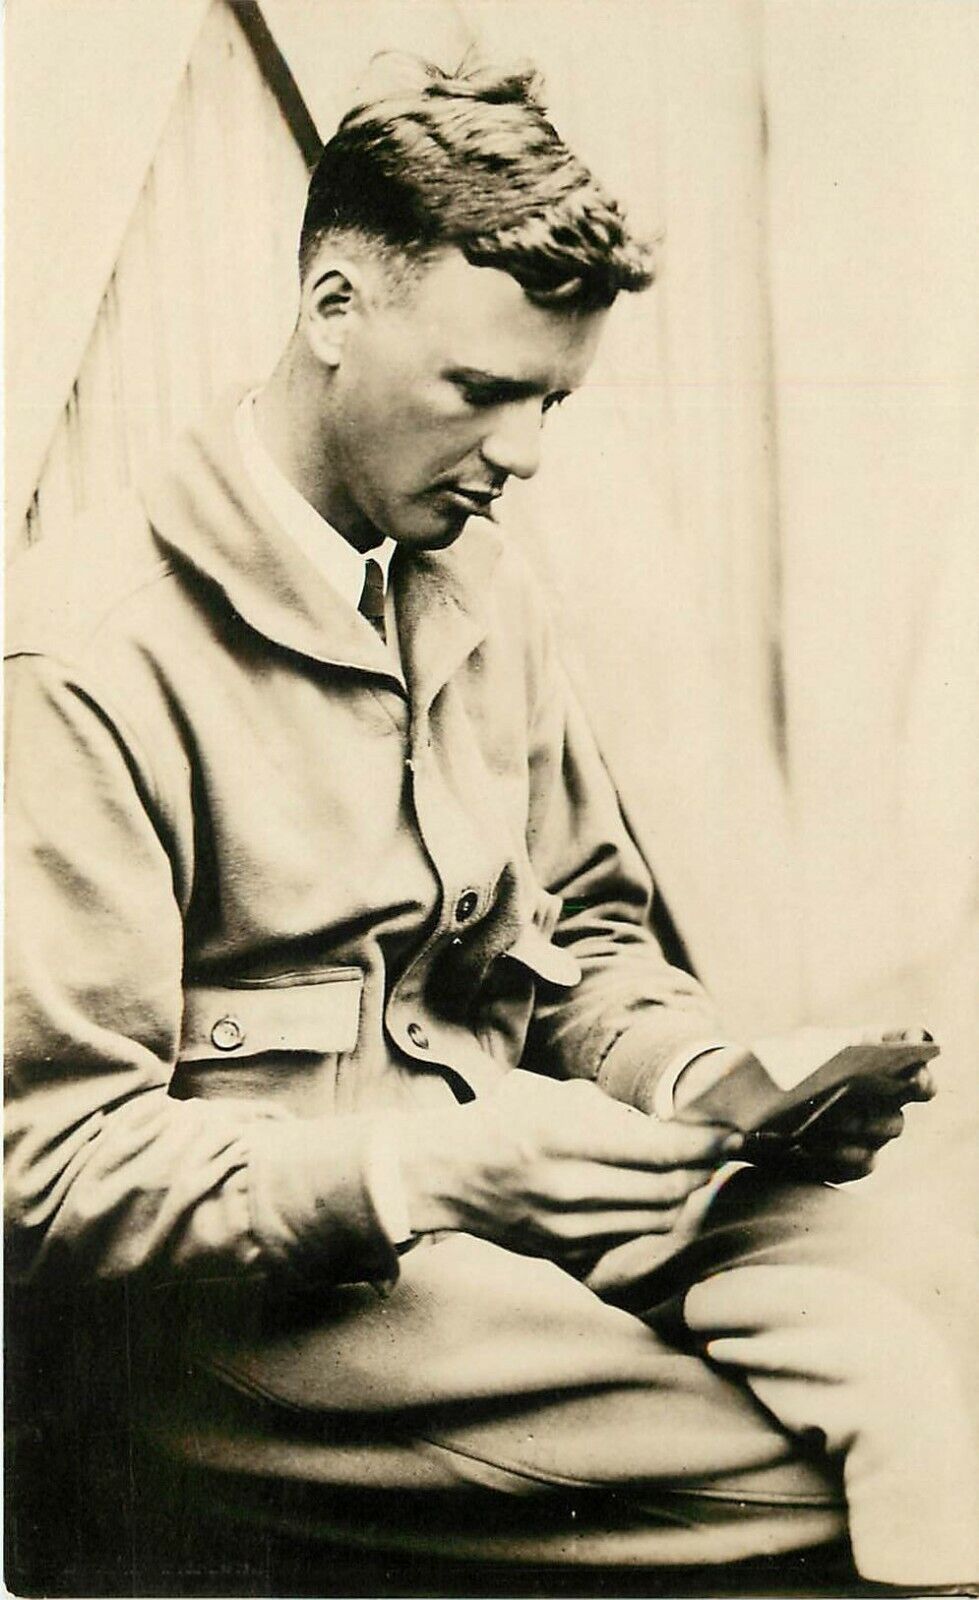 RPPC Postcard Charles Lindbergh in Flight Suit reading Papers, France, Underwood